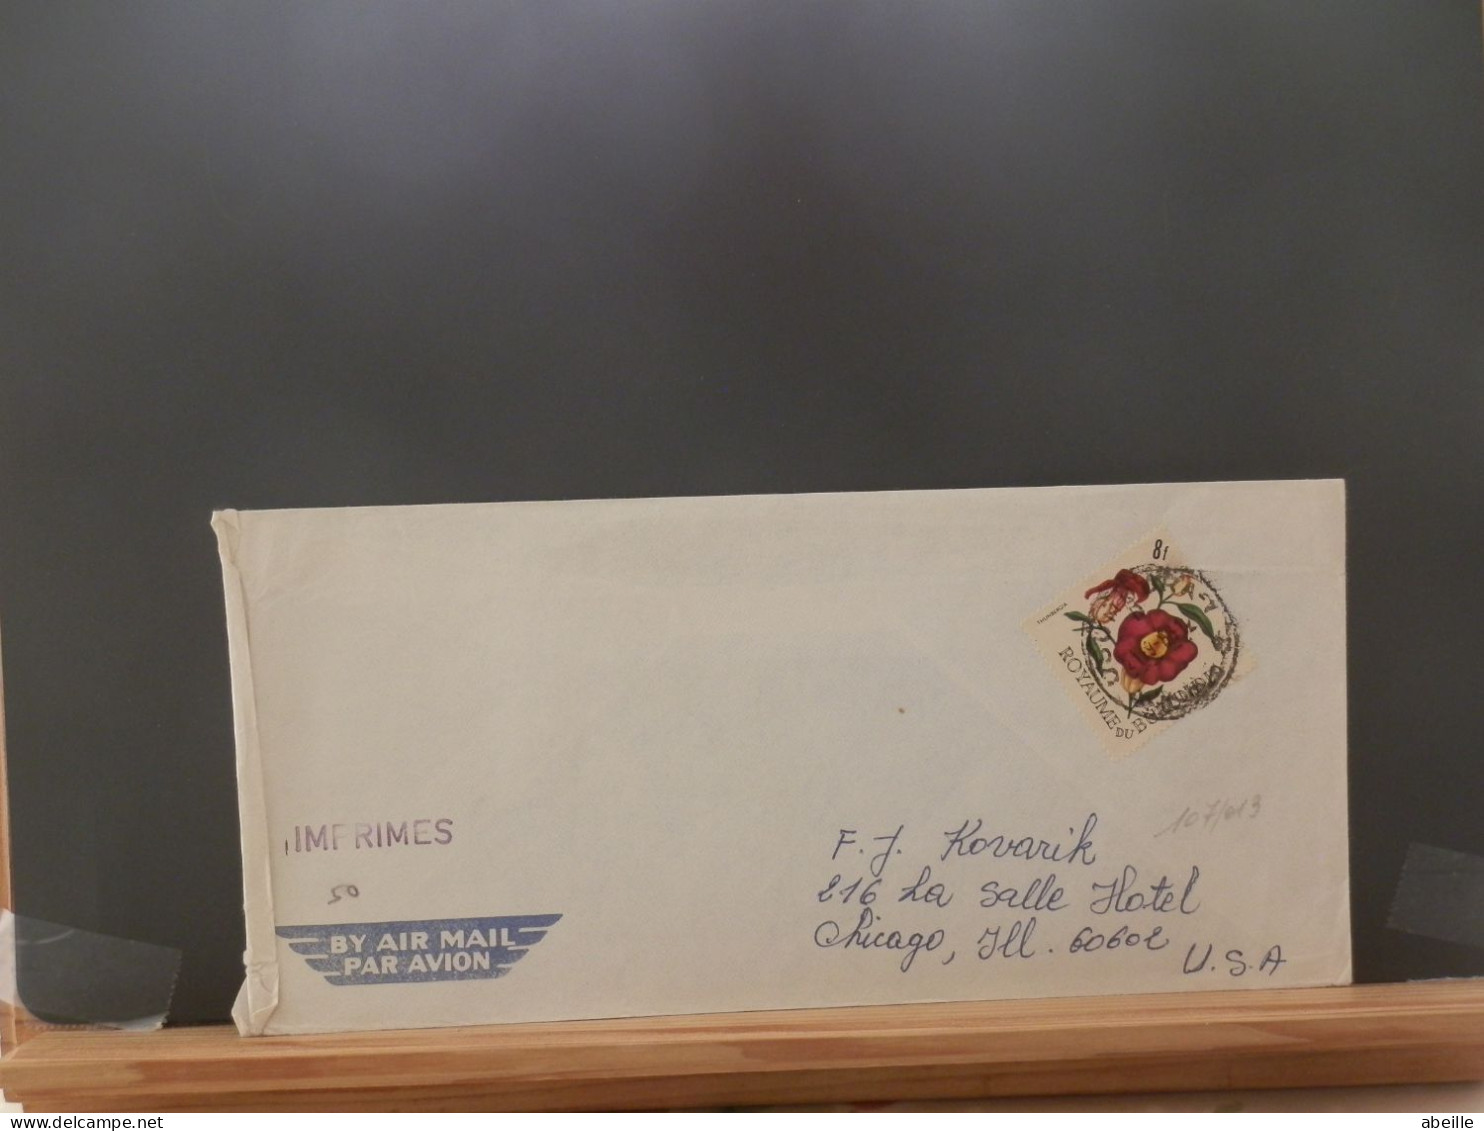 107/013 LETTRE BURUNDI 1966 POUR USA - Briefe U. Dokumente